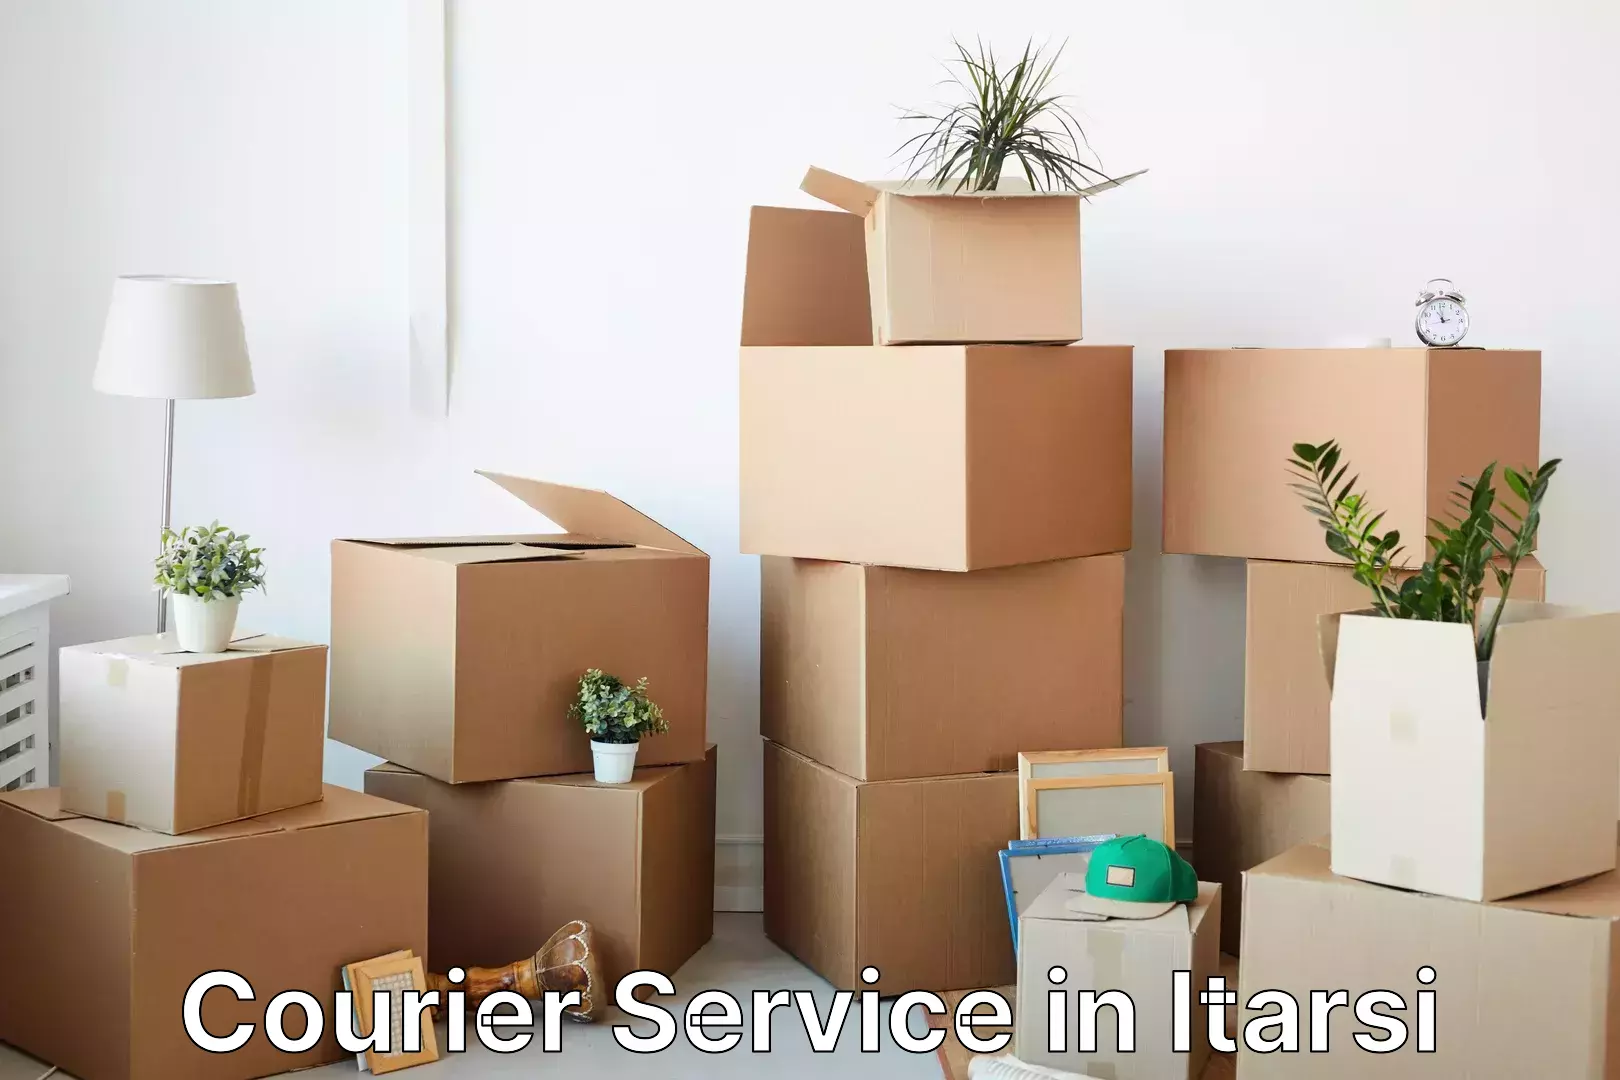 Customer-focused courier in Itarsi